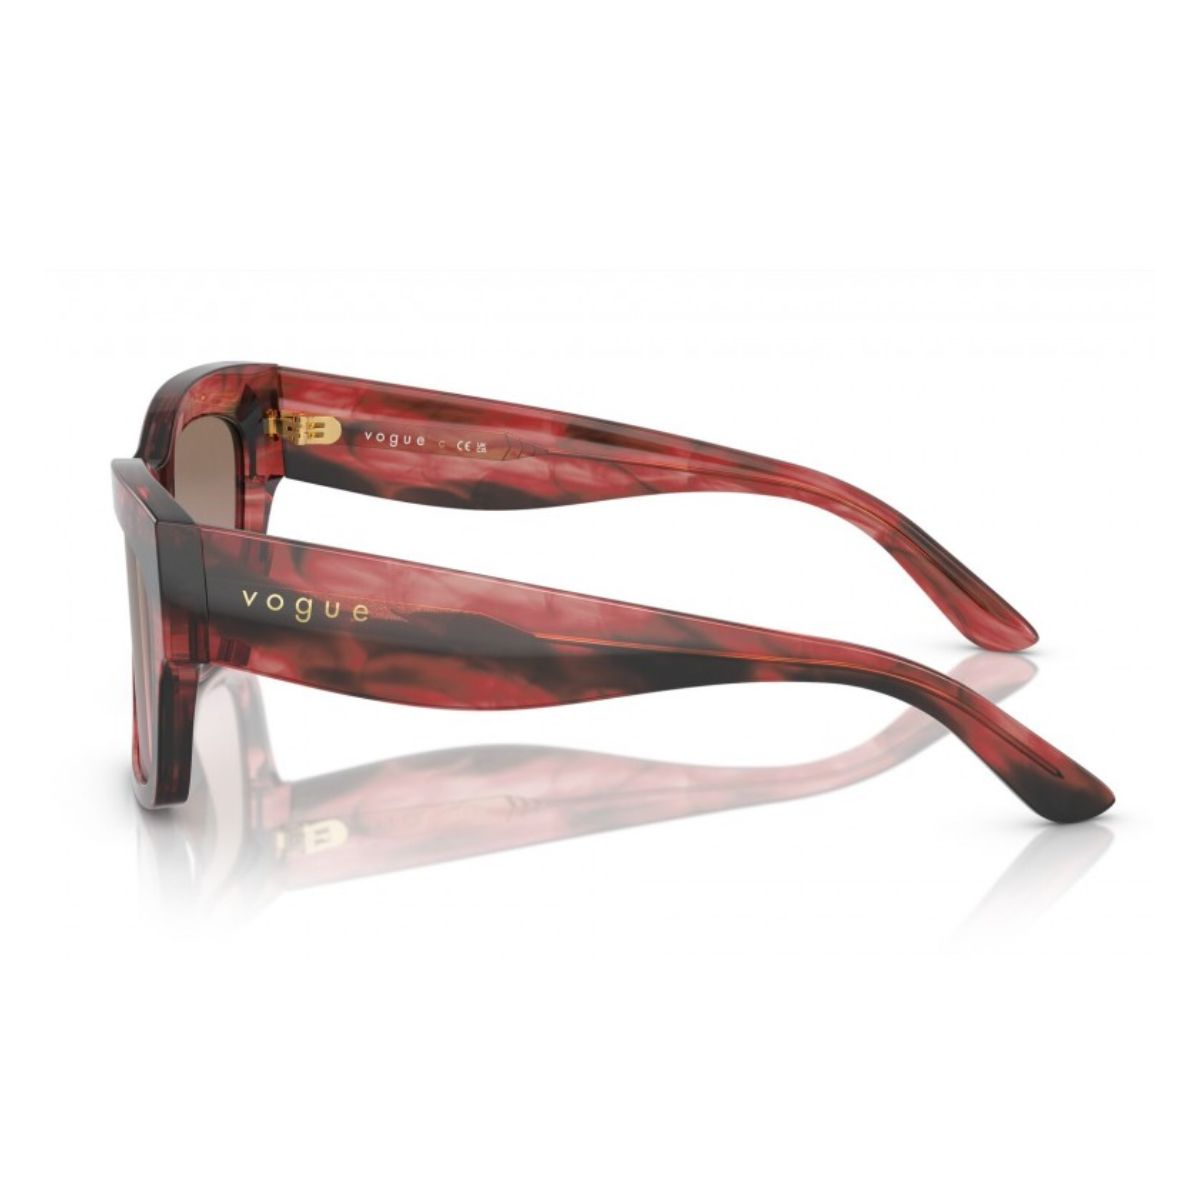 "Shop Trendy Vogue Red color Rectangle Sunglasses For Women's | Optorium"